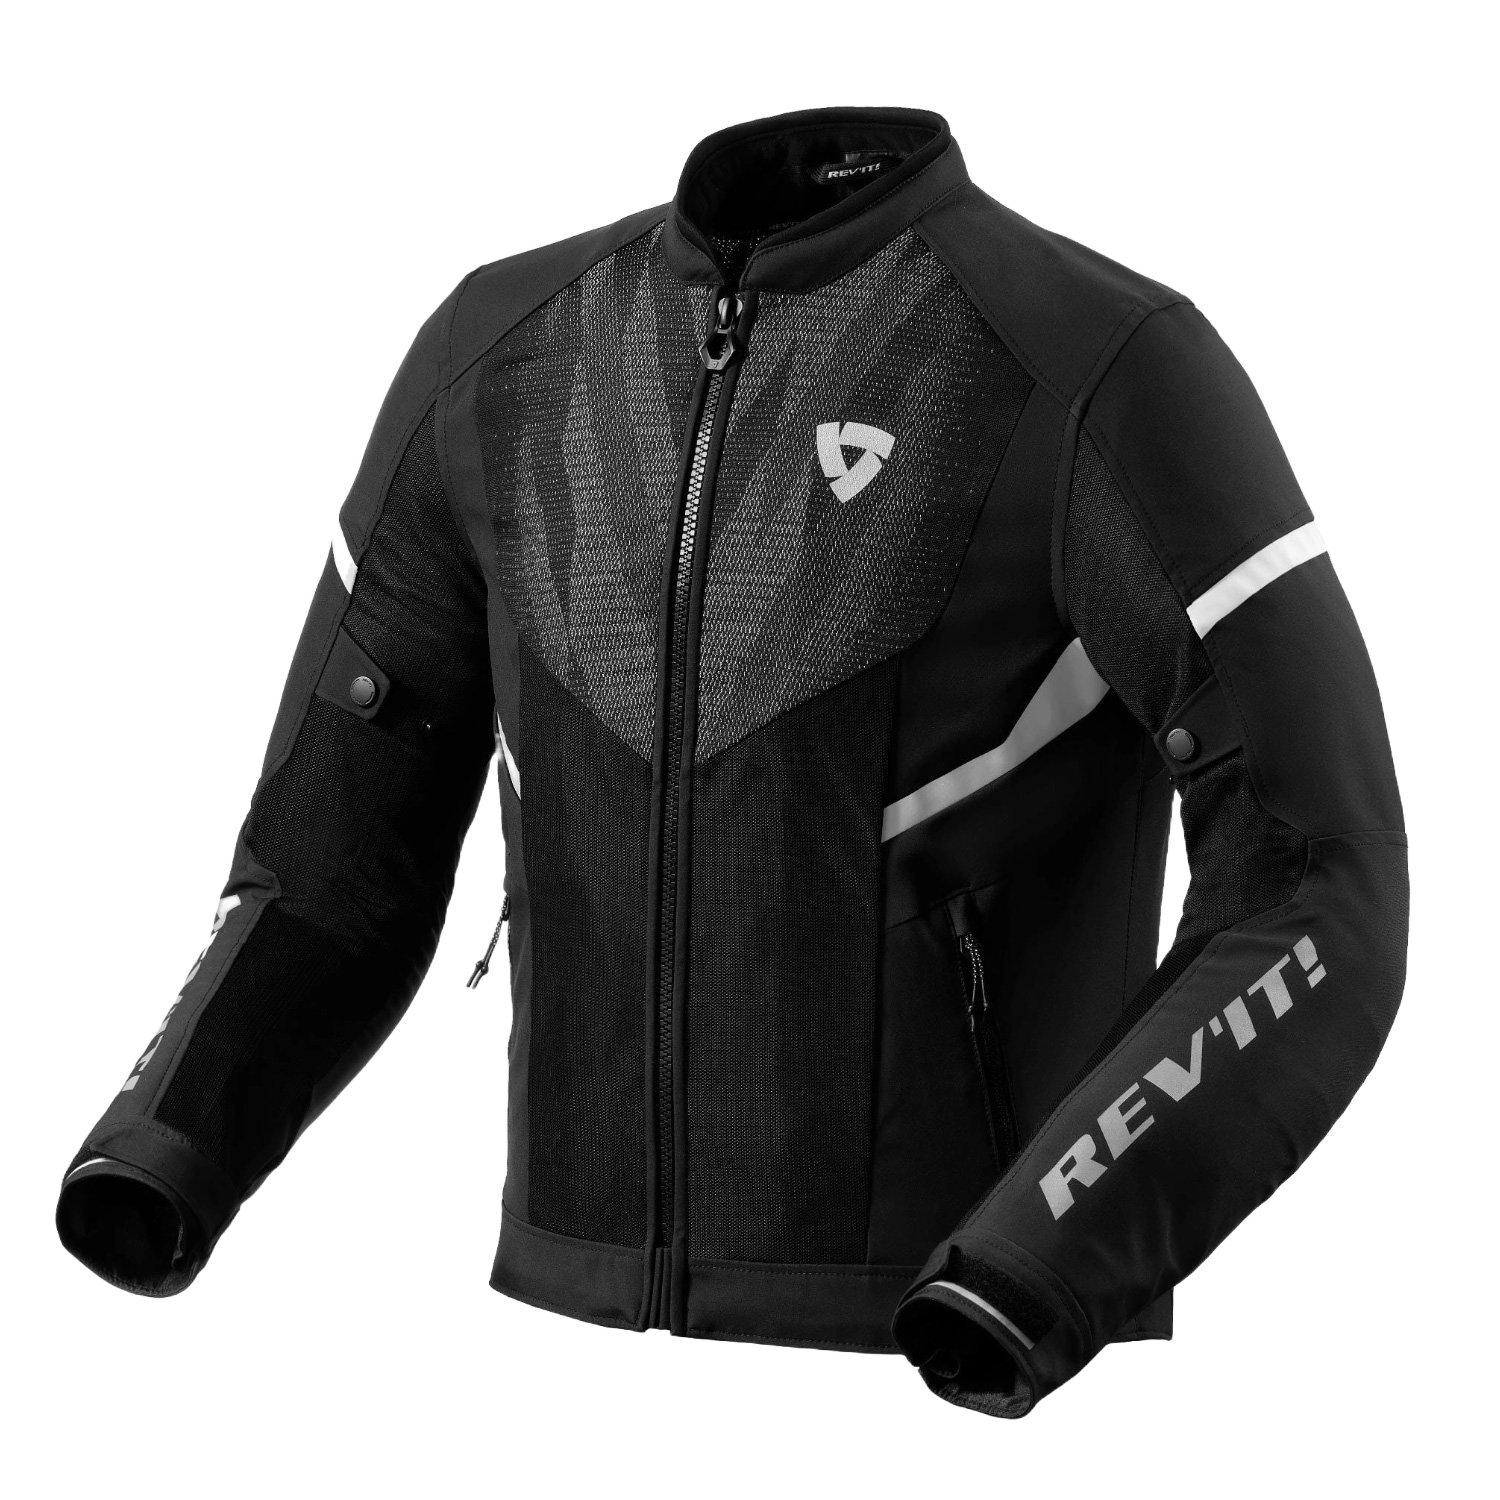 Image of REV'IT! Hyperspeed 2 GT Air Jacket Black White Size M EN